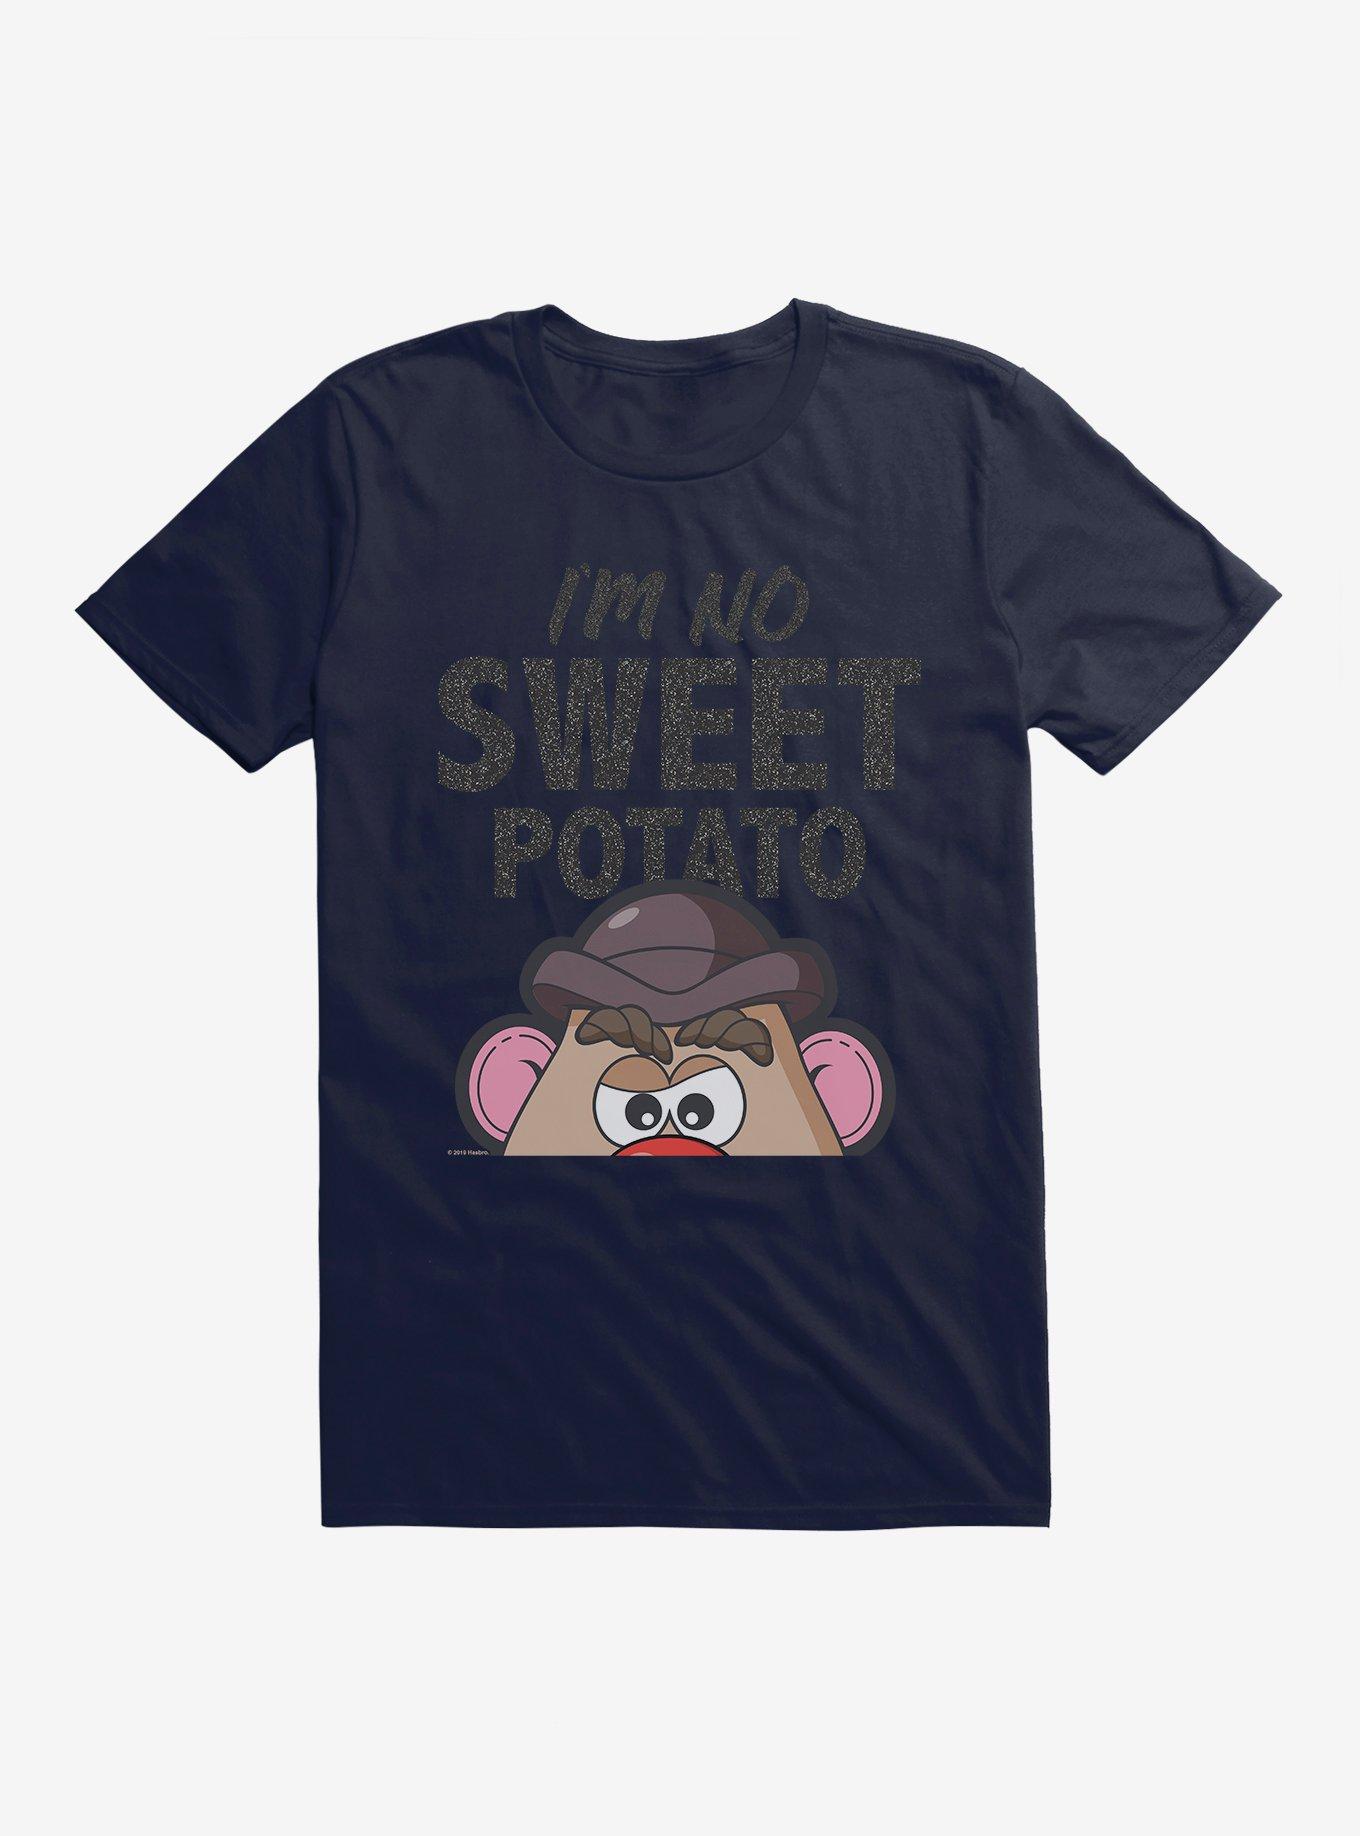 Mr. Potato Head I'm No Sweet T-Shirt